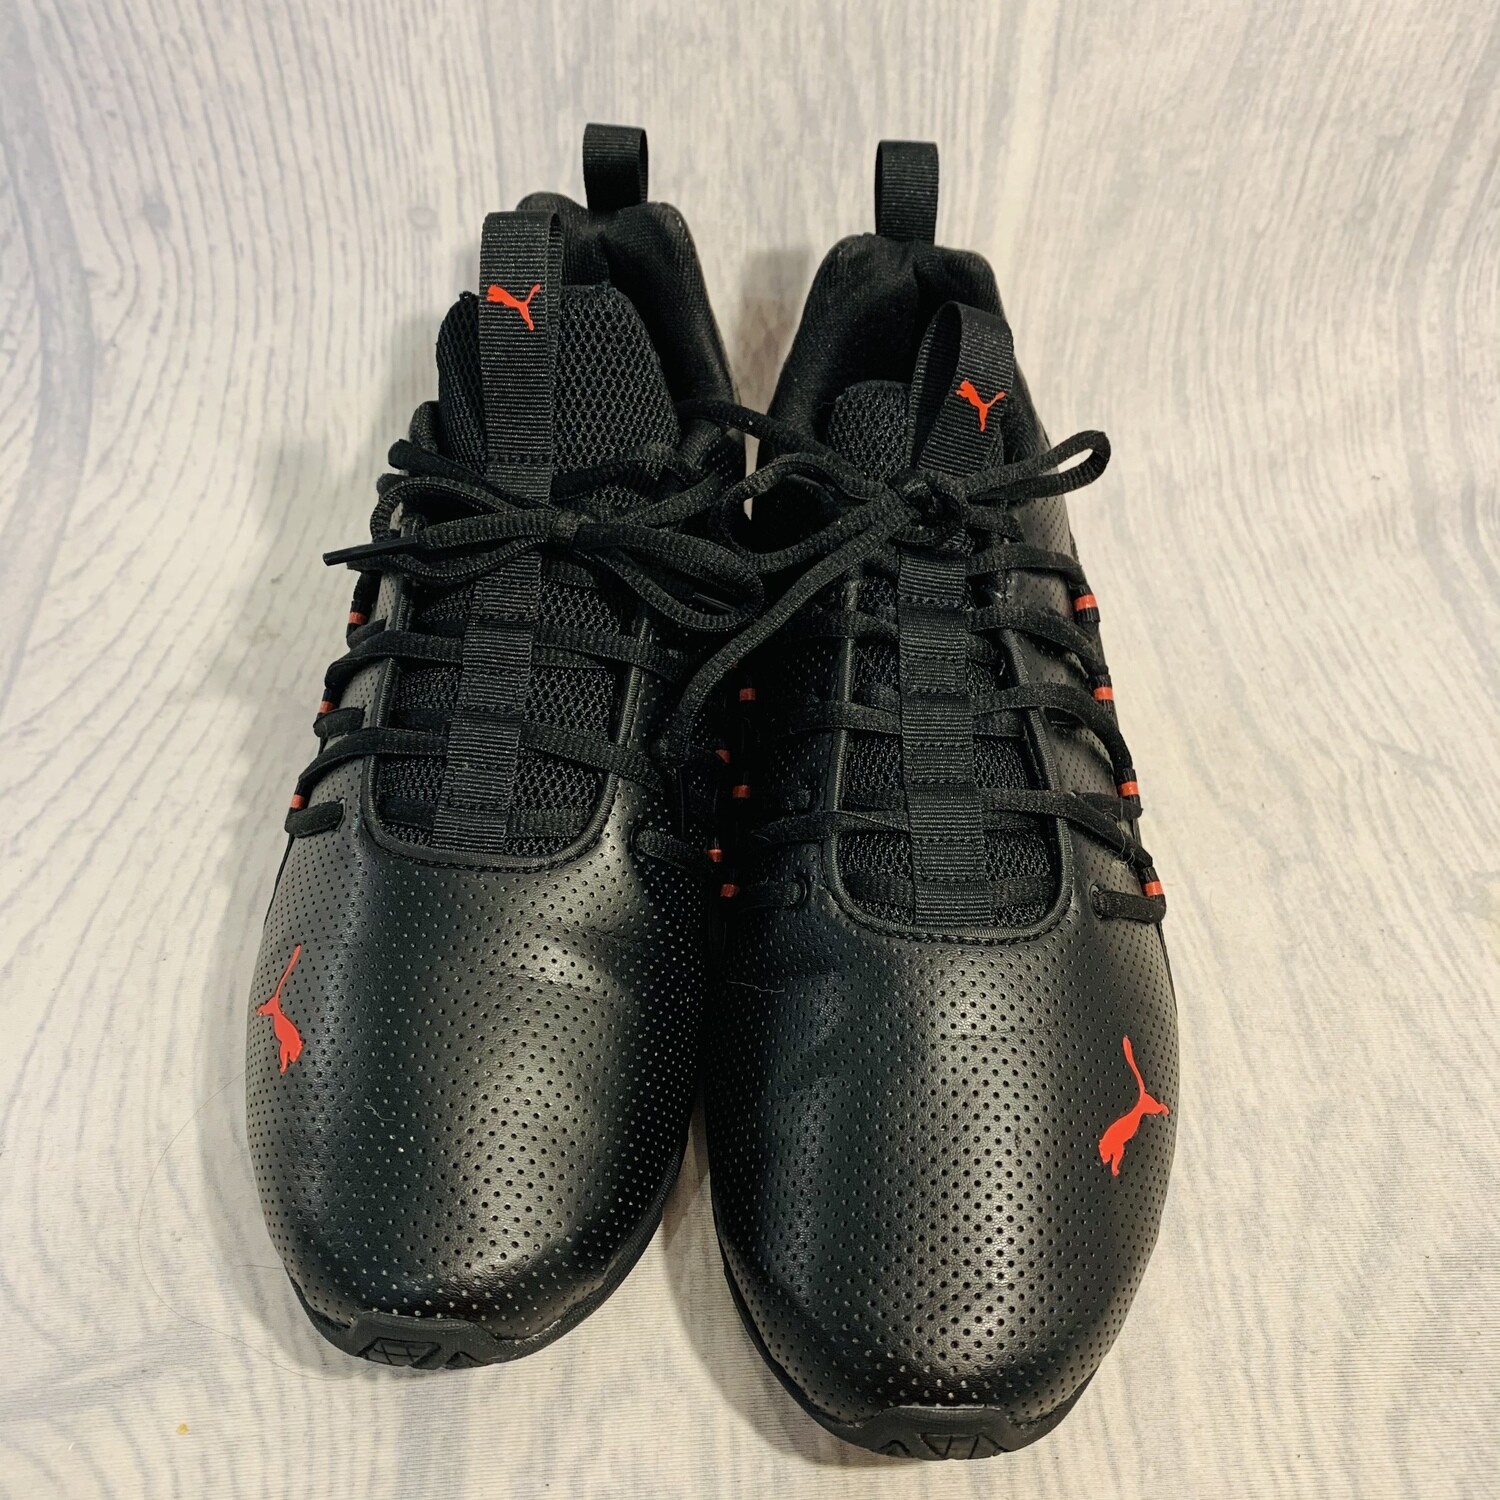 Size 10 Puma Axelion Perf Training Shoe Black/Red